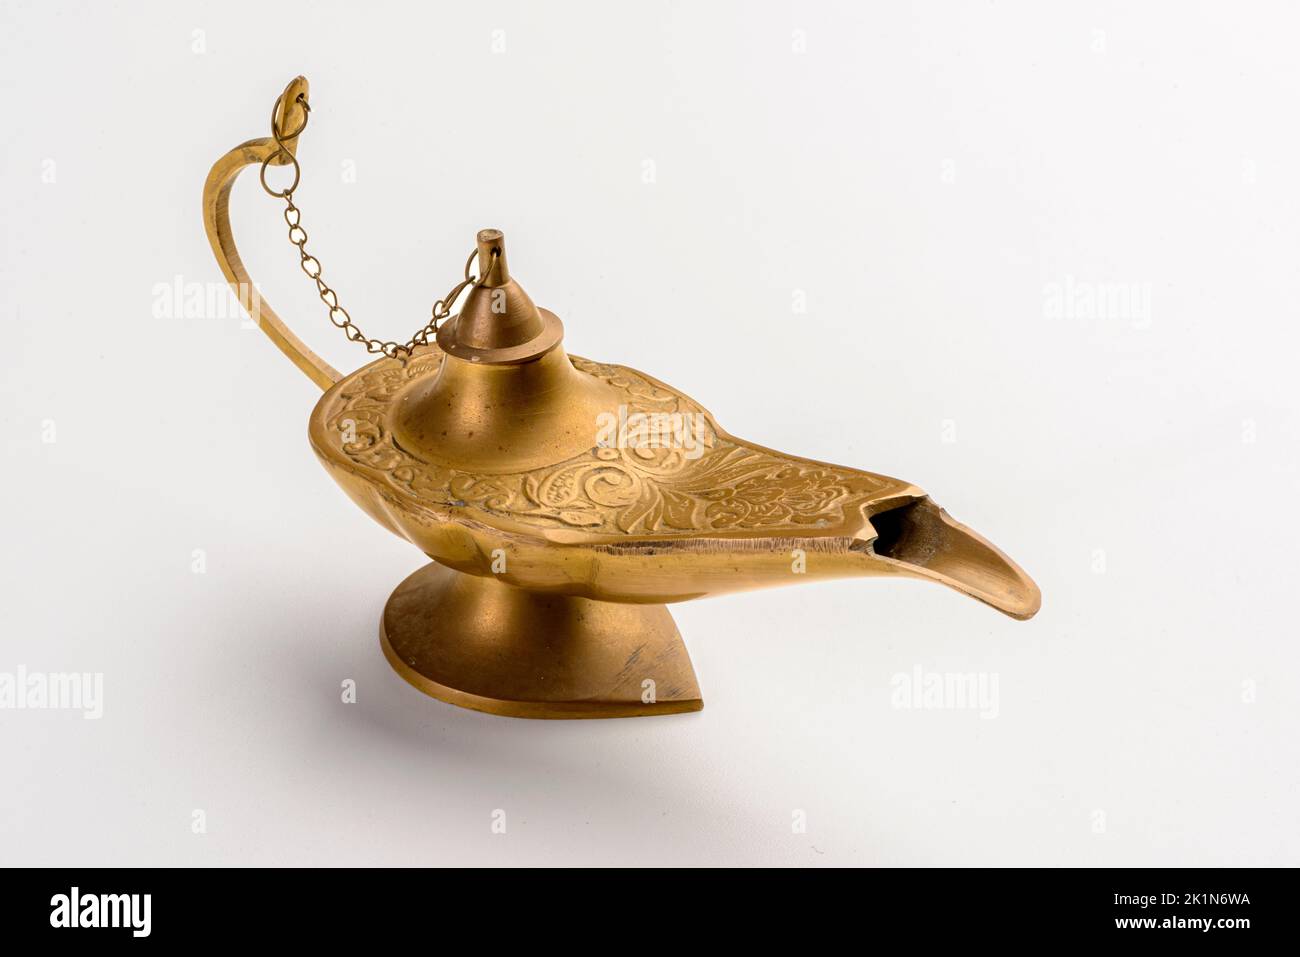 Aladdin Magic Lamp East Design Stock Photo - Image of brass, east: 31666926